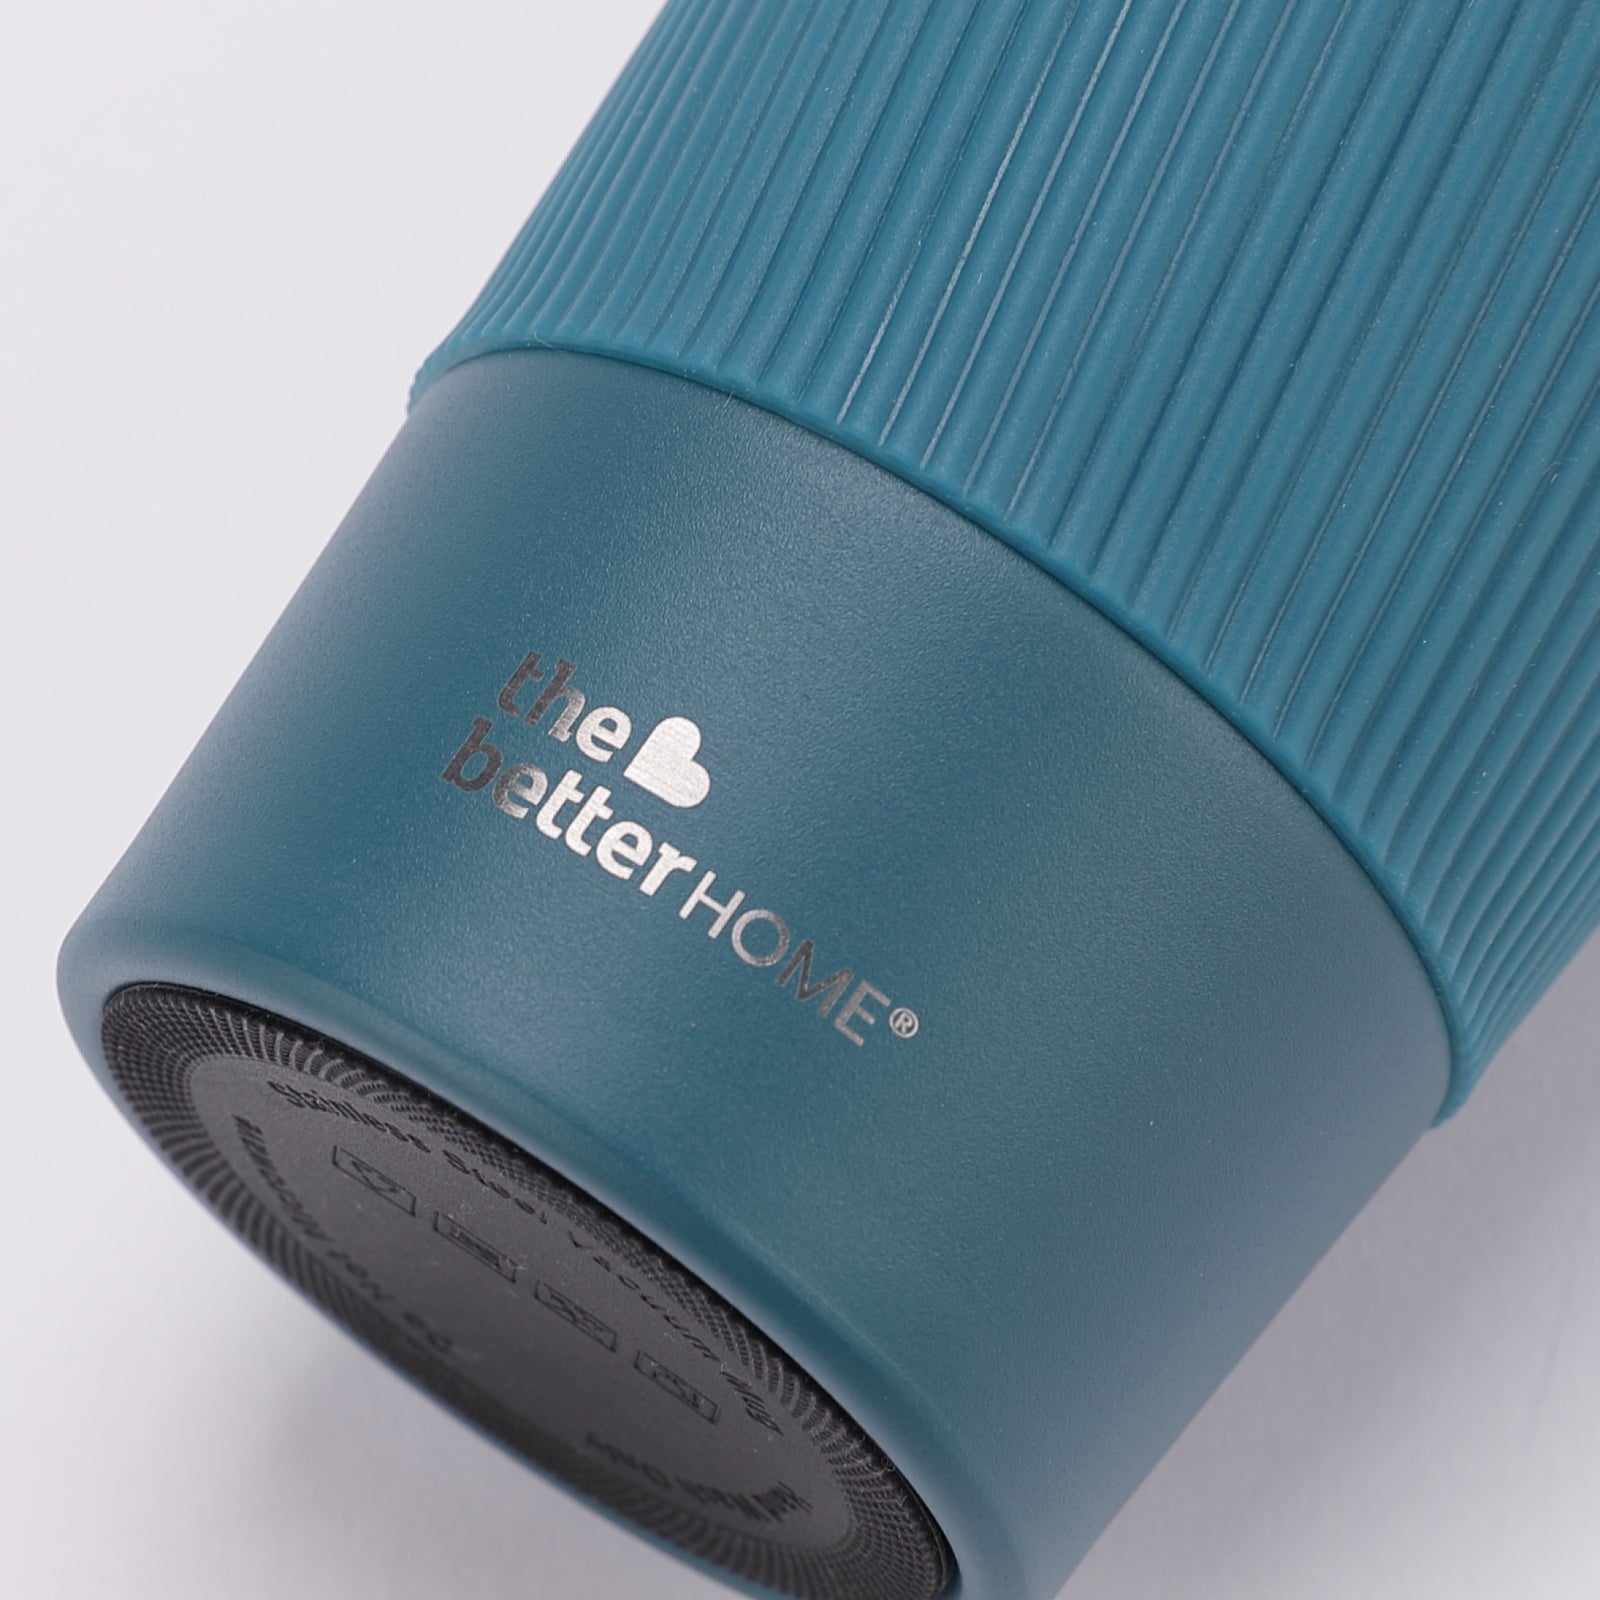 Stainless Steel Insulated Coffee Mug with Sleeve - Blue - 380ml - Rage Coffee